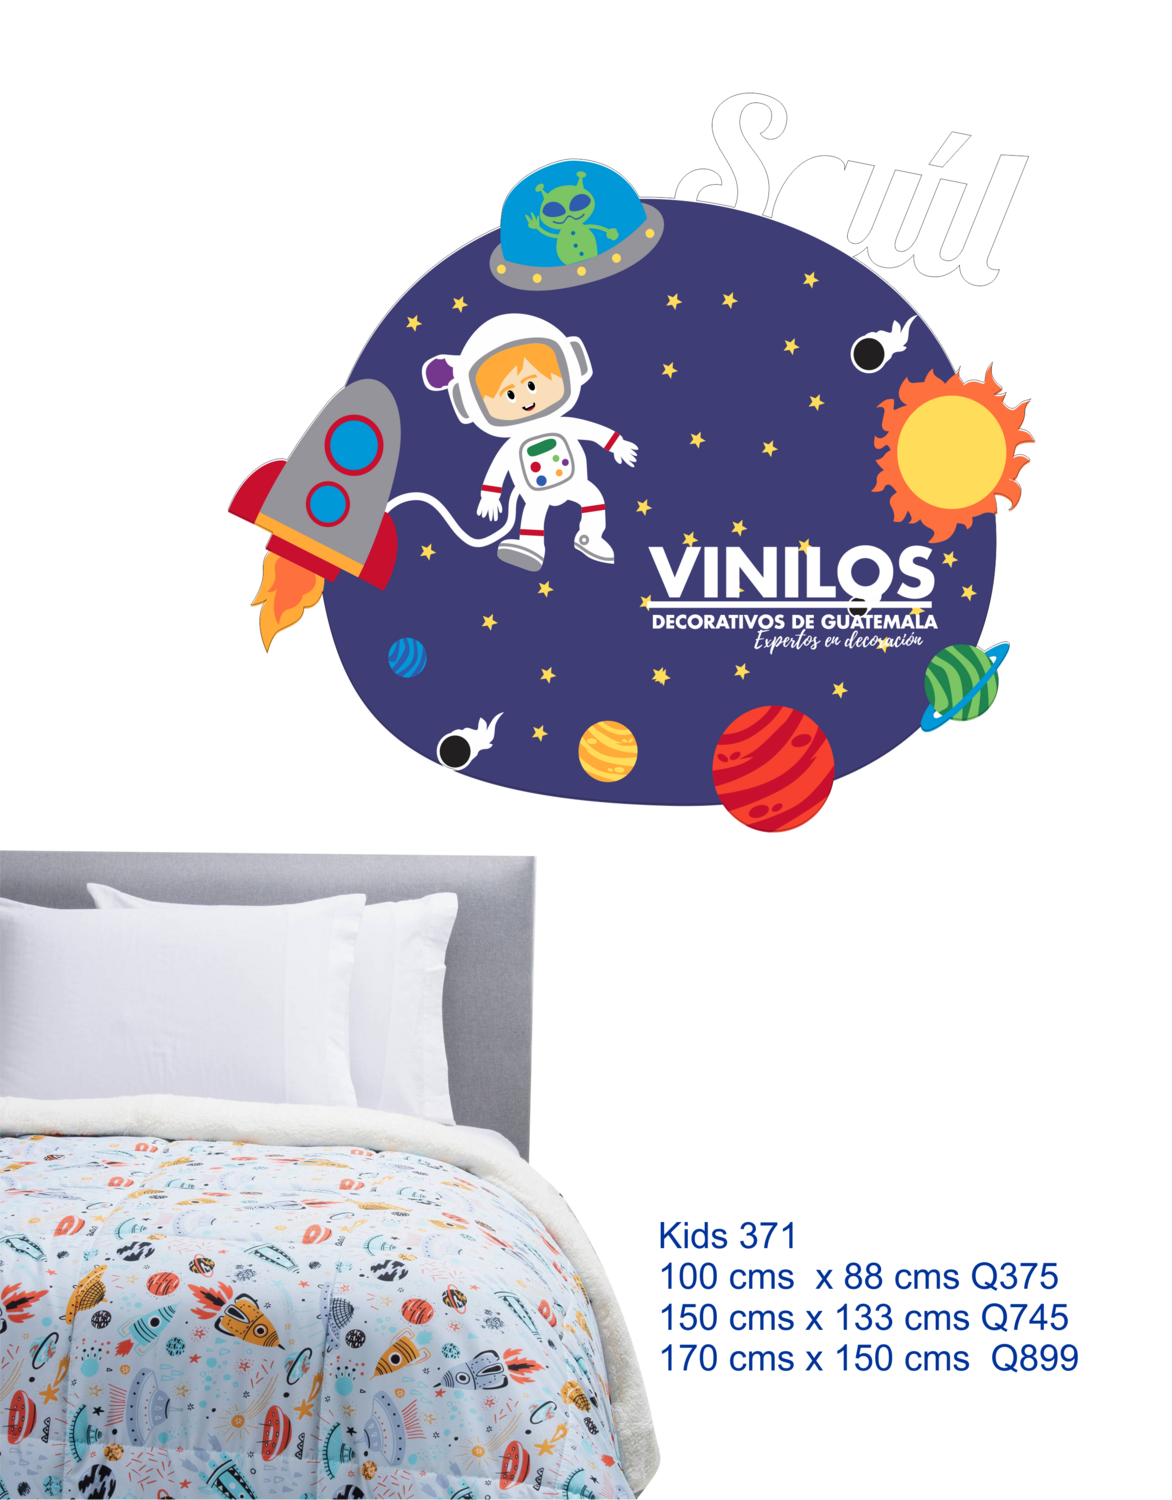 Space Wall Decals - Nursery Decor, Kids Room, Star Decals, Planets Decor, Vinilo decorativos kids371